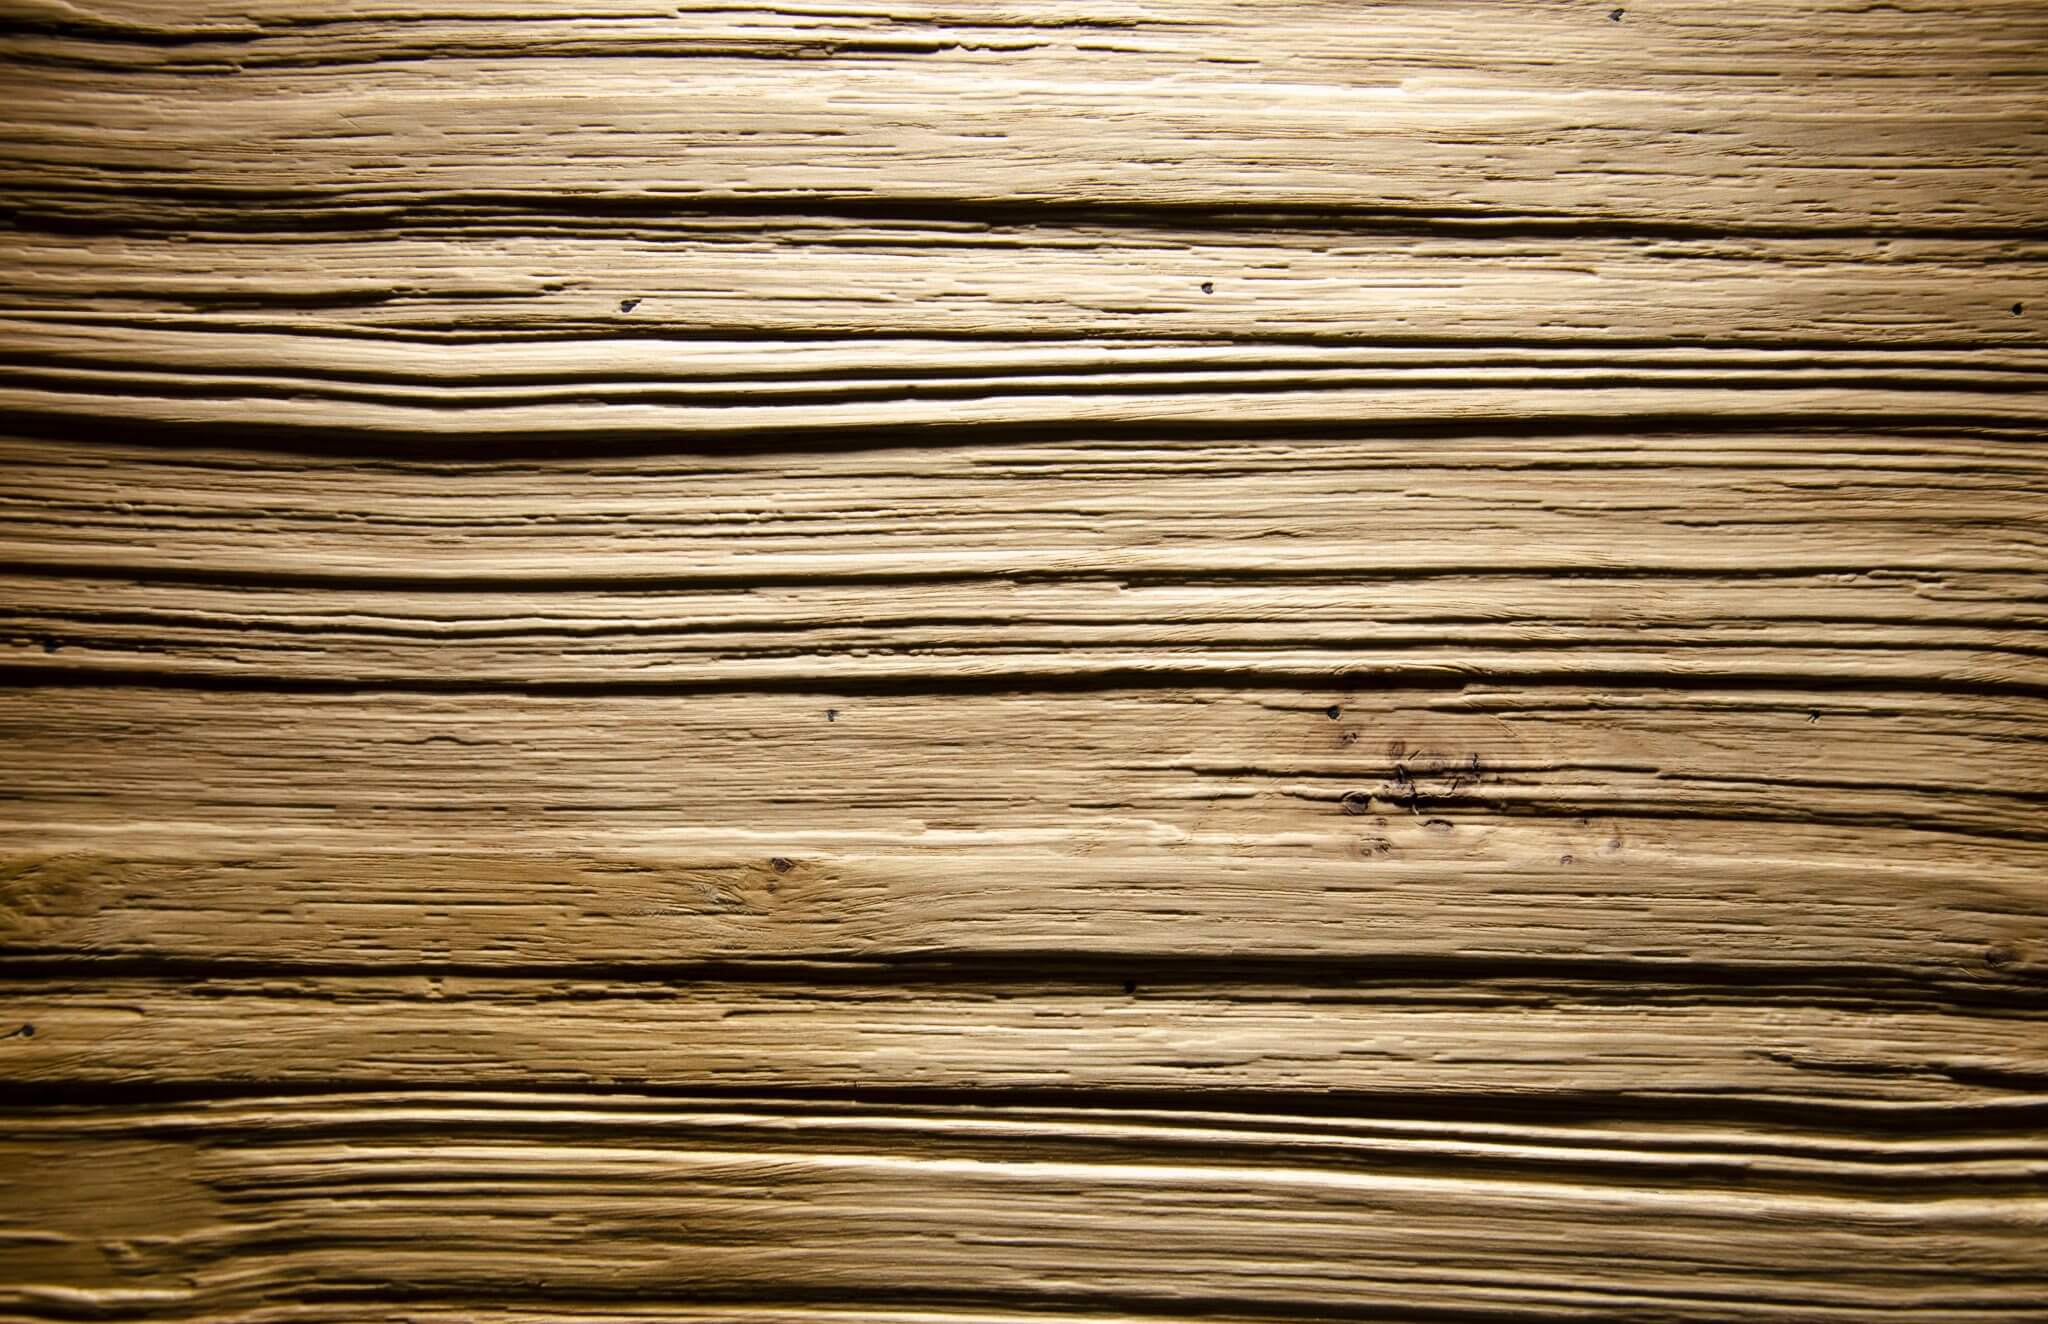 03 – Rose Oak - Real wood veneer